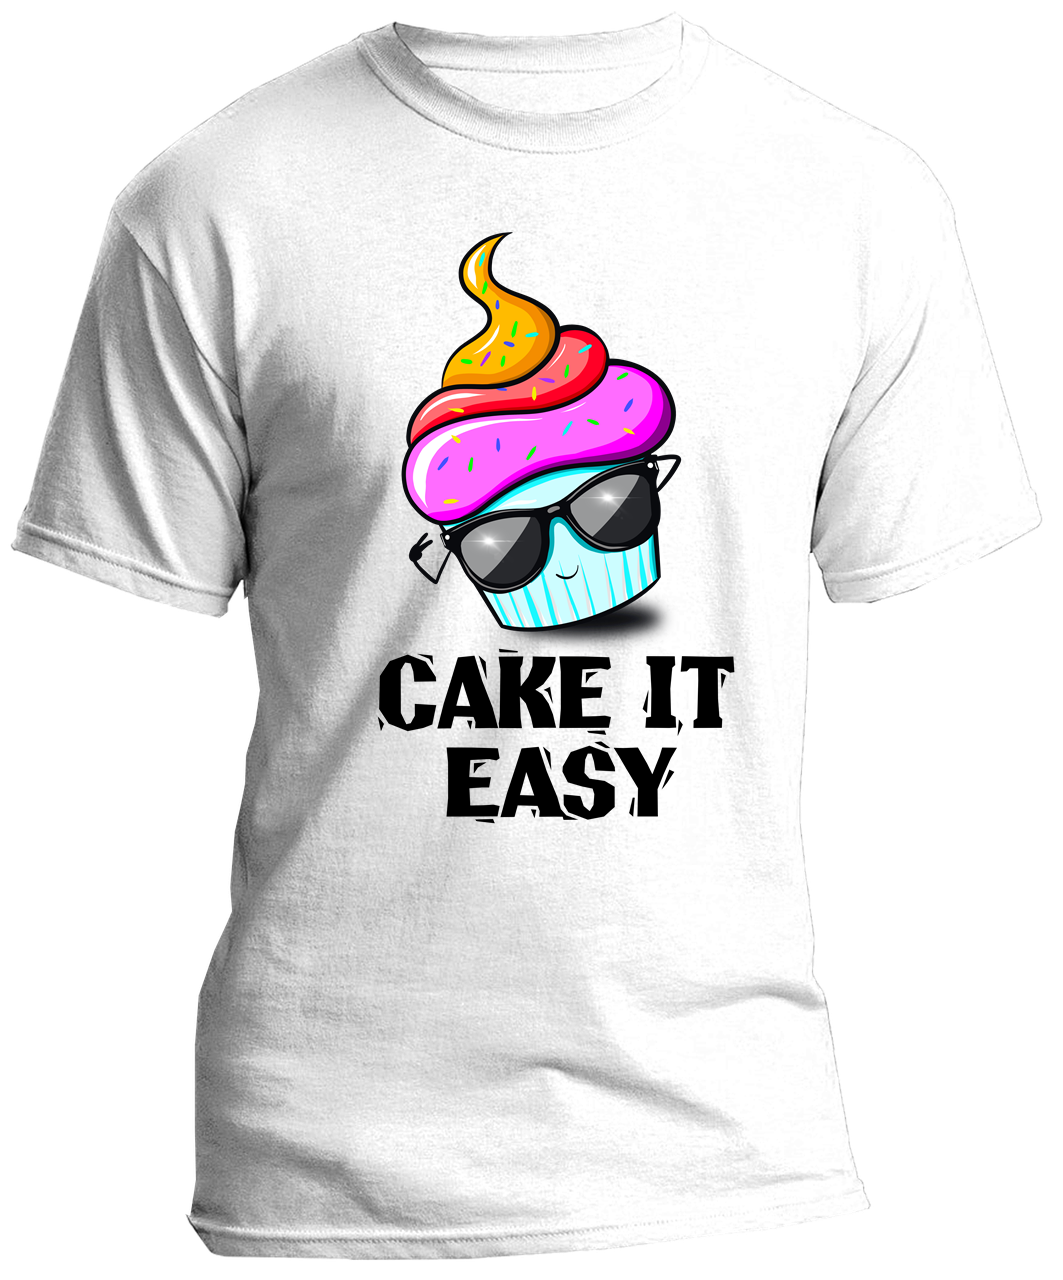 T-Shirt "cake it easy"